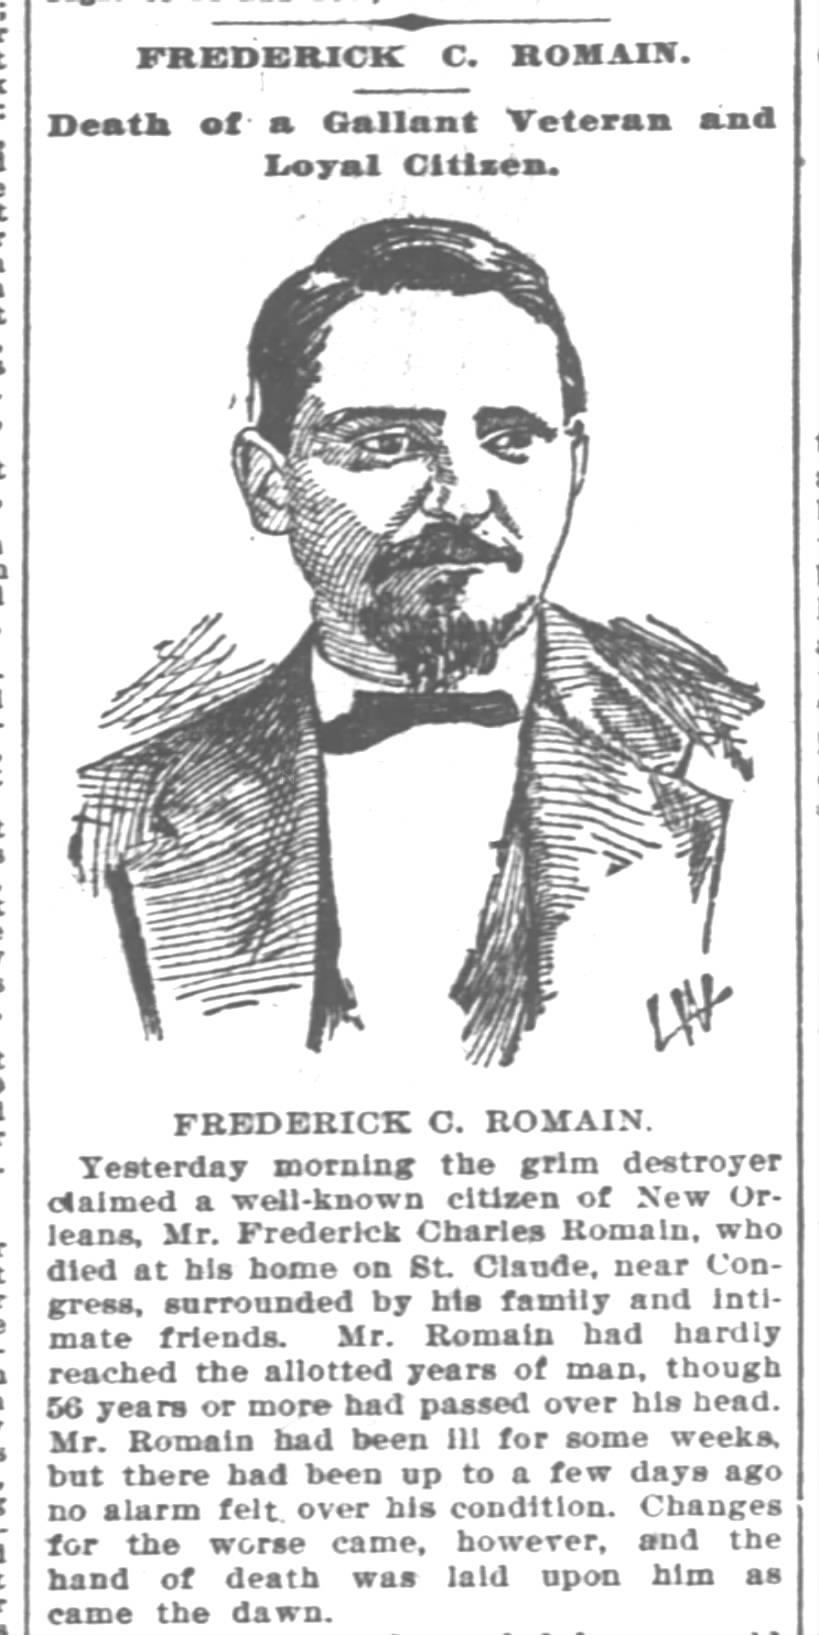 Frederick C. Romain died Part 1